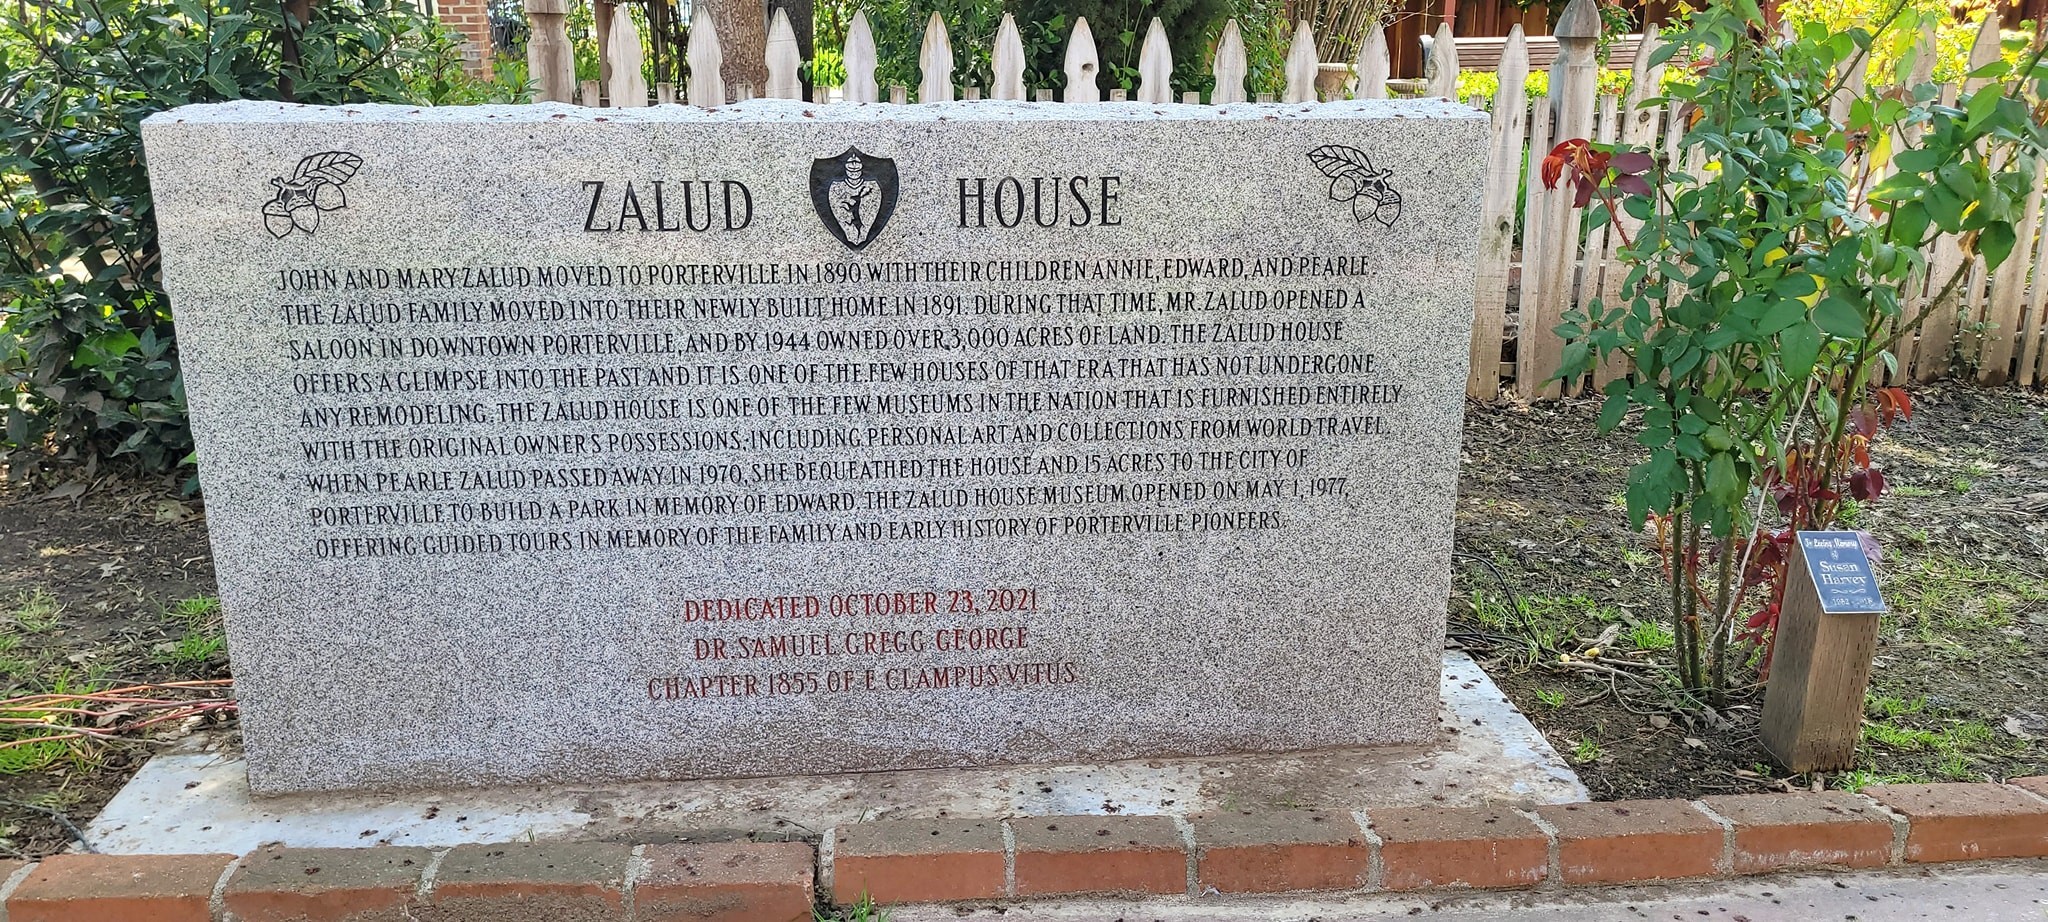 Zalud House